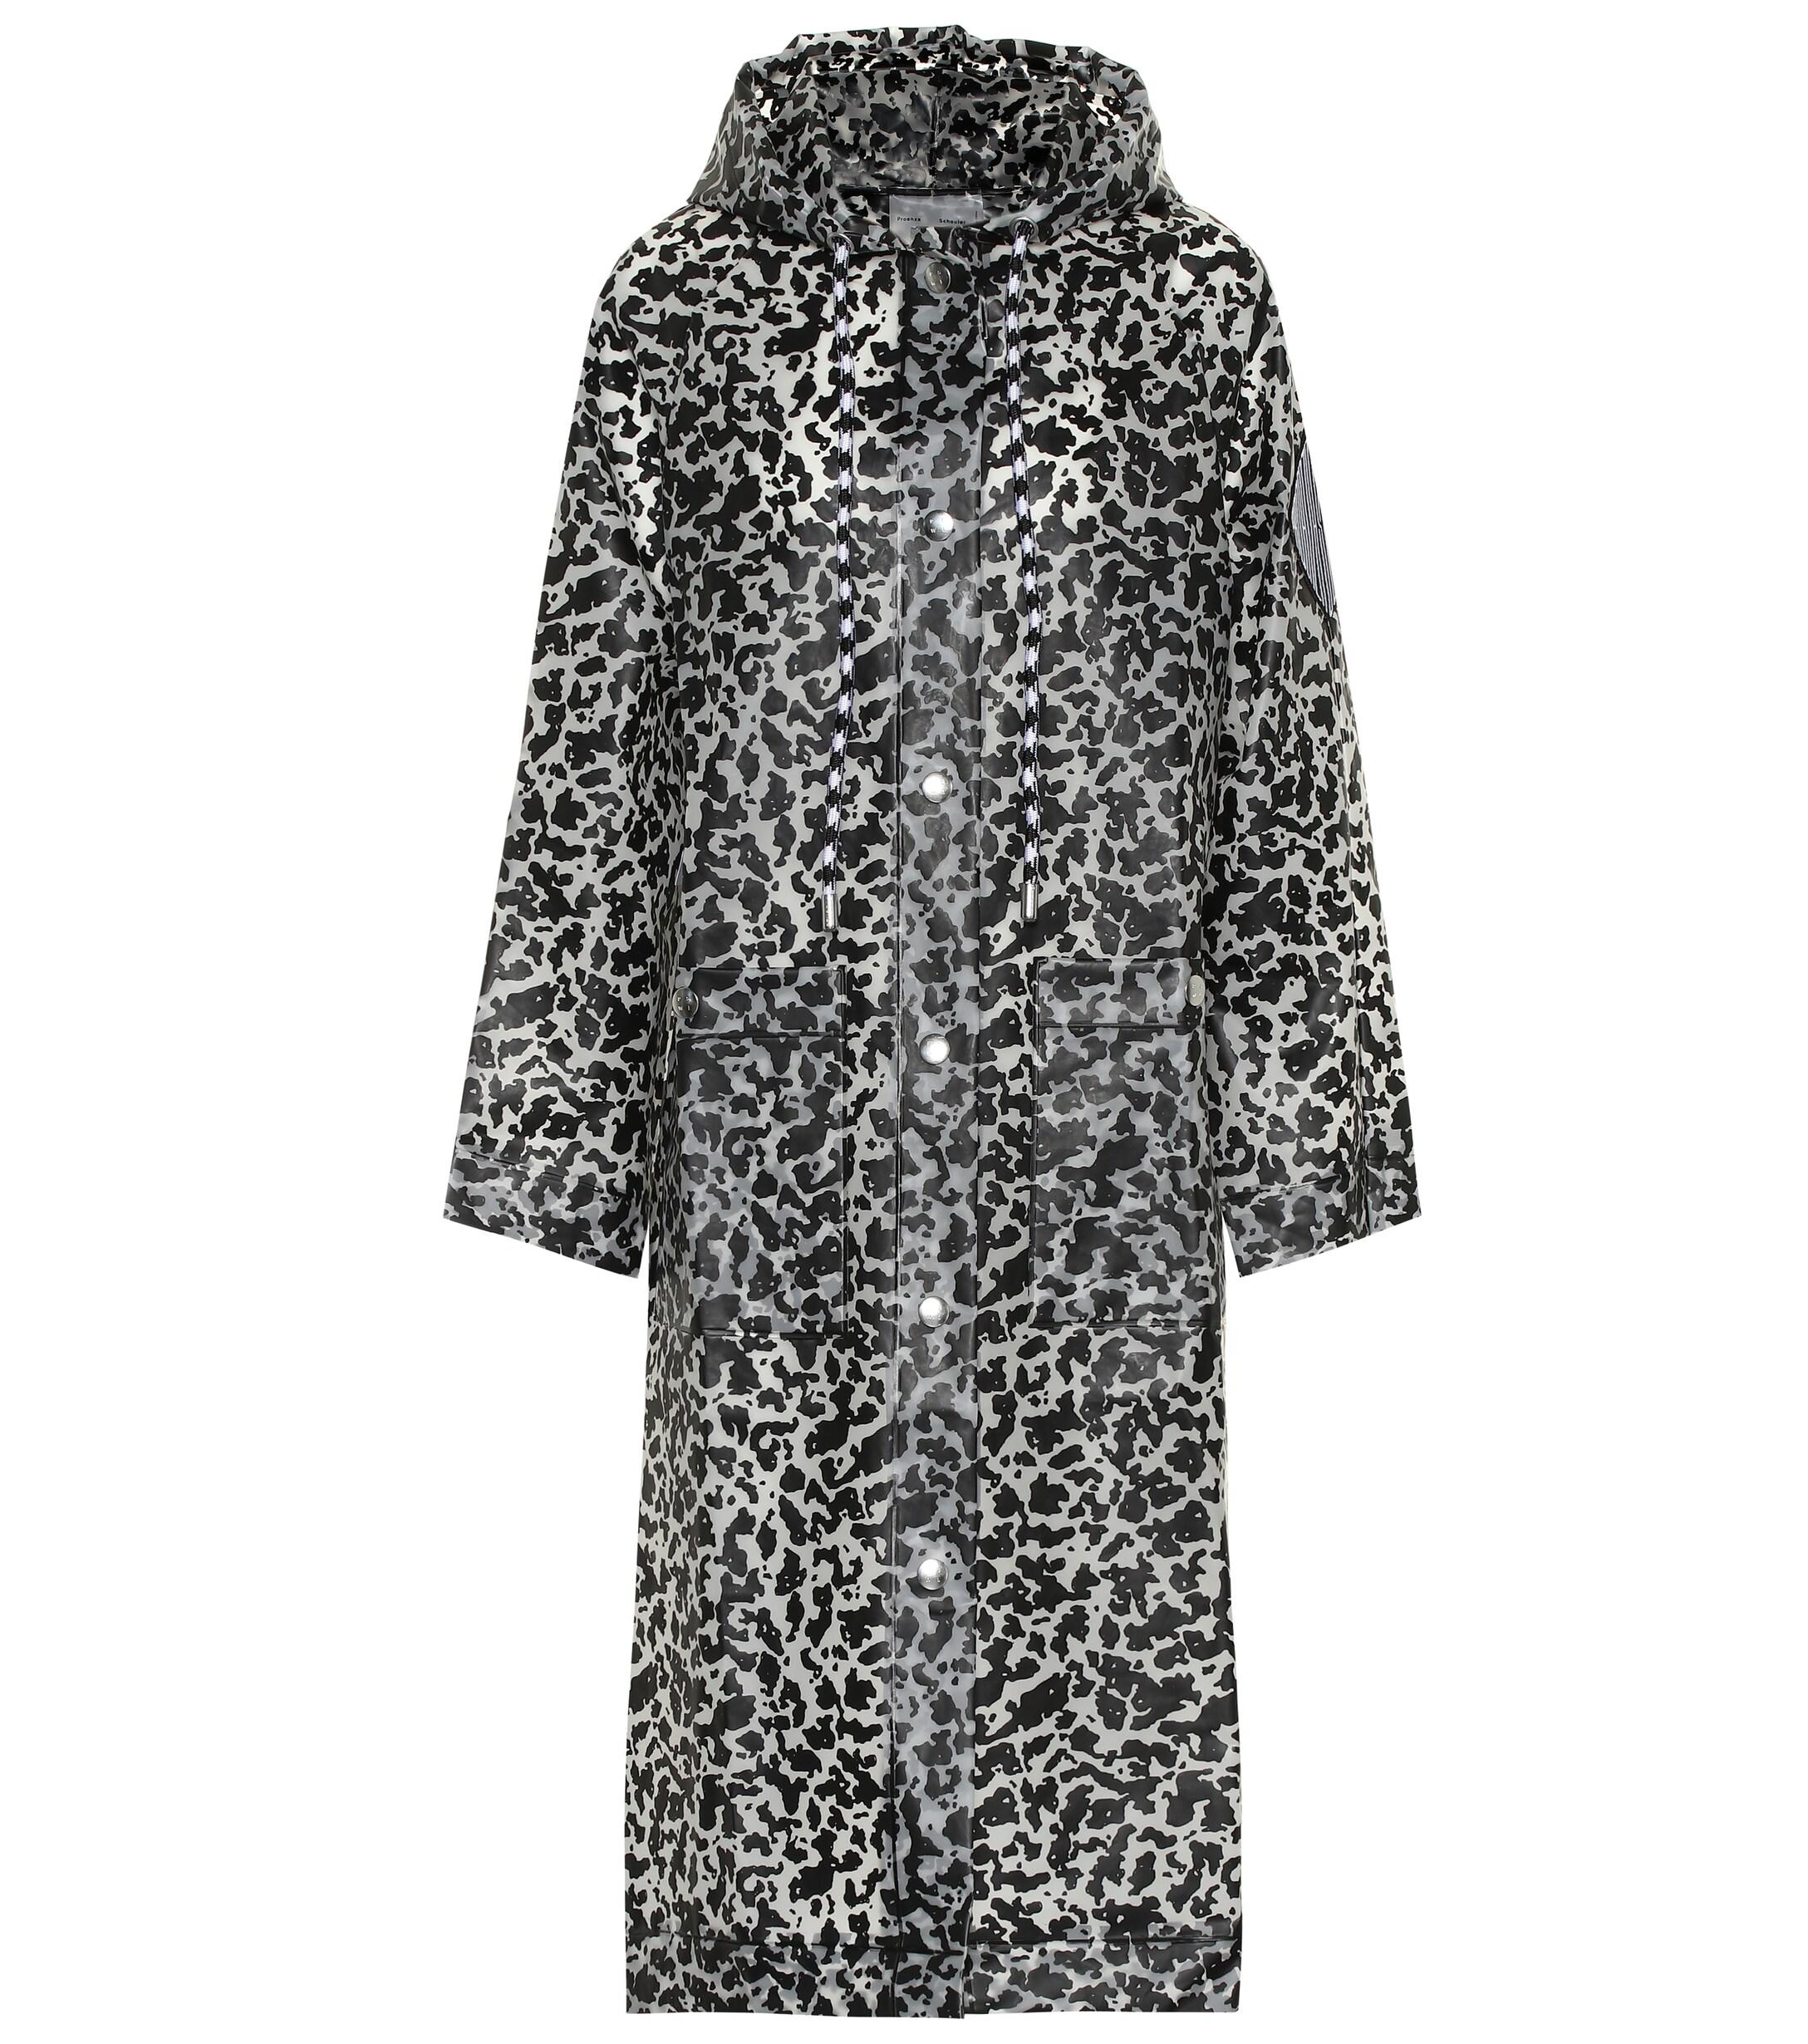 Proenza Schouler Pswl Printed Raincoat in Black - Lyst